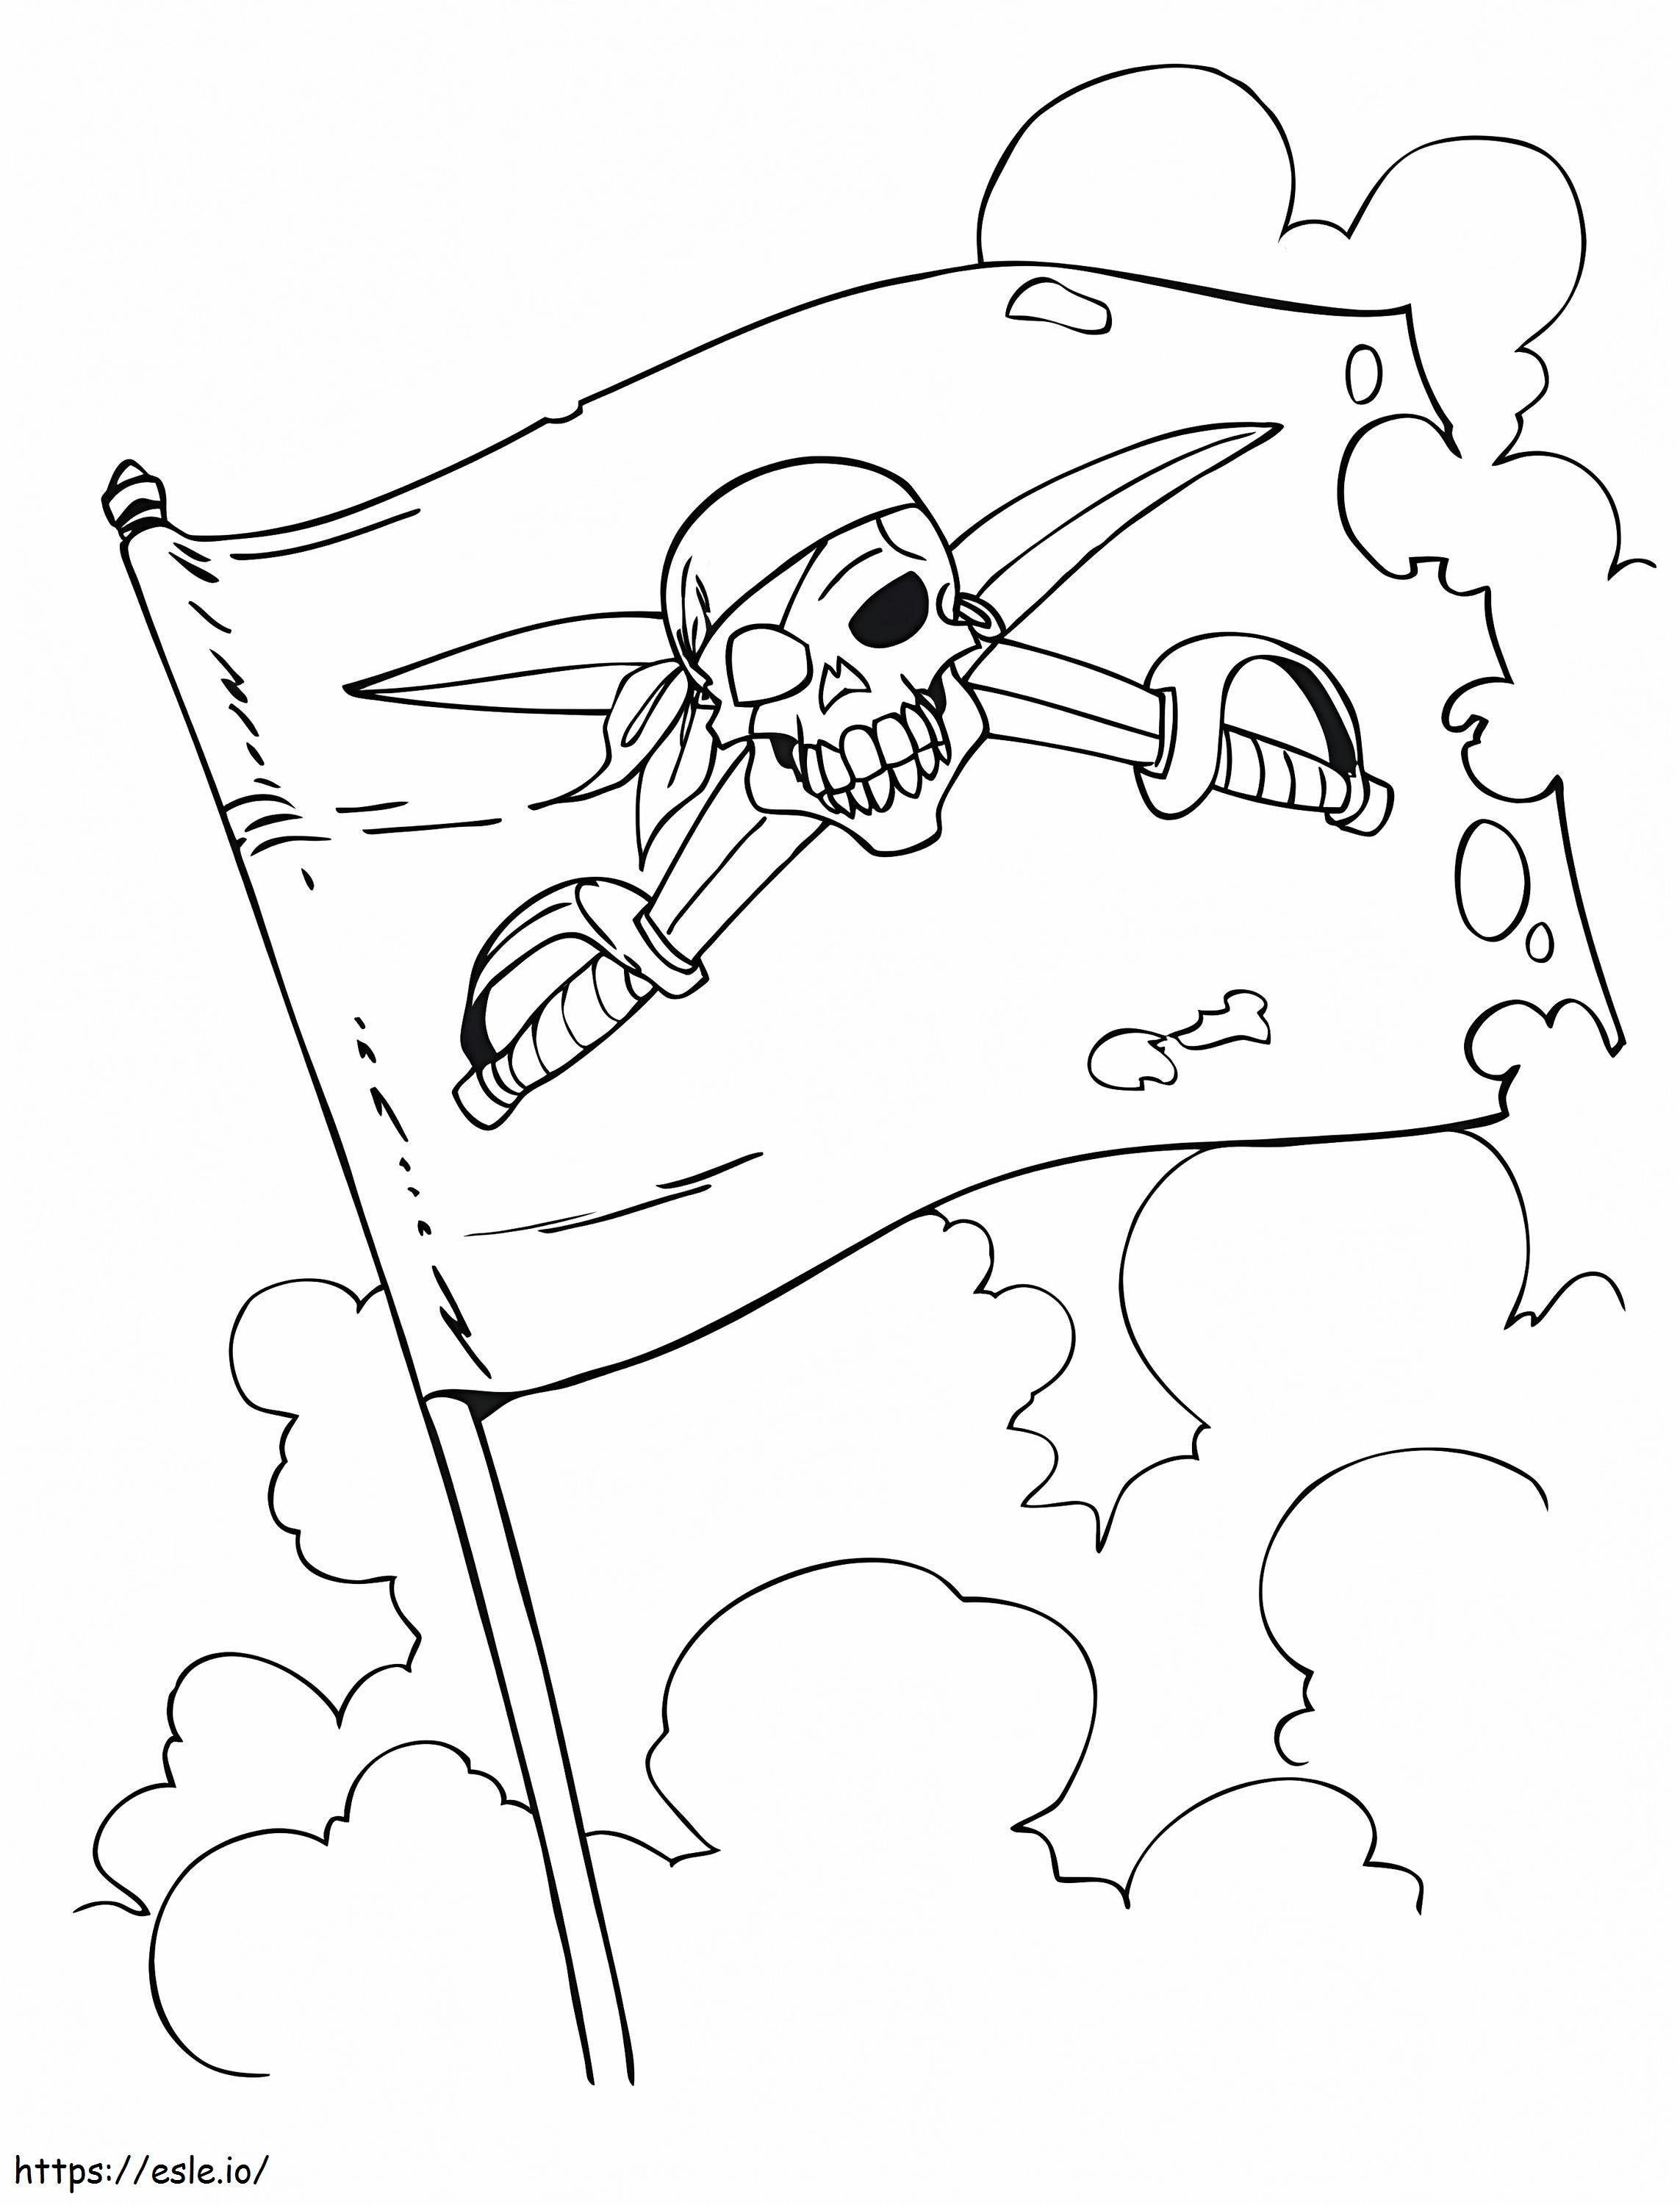 Un steag pirat de colorat